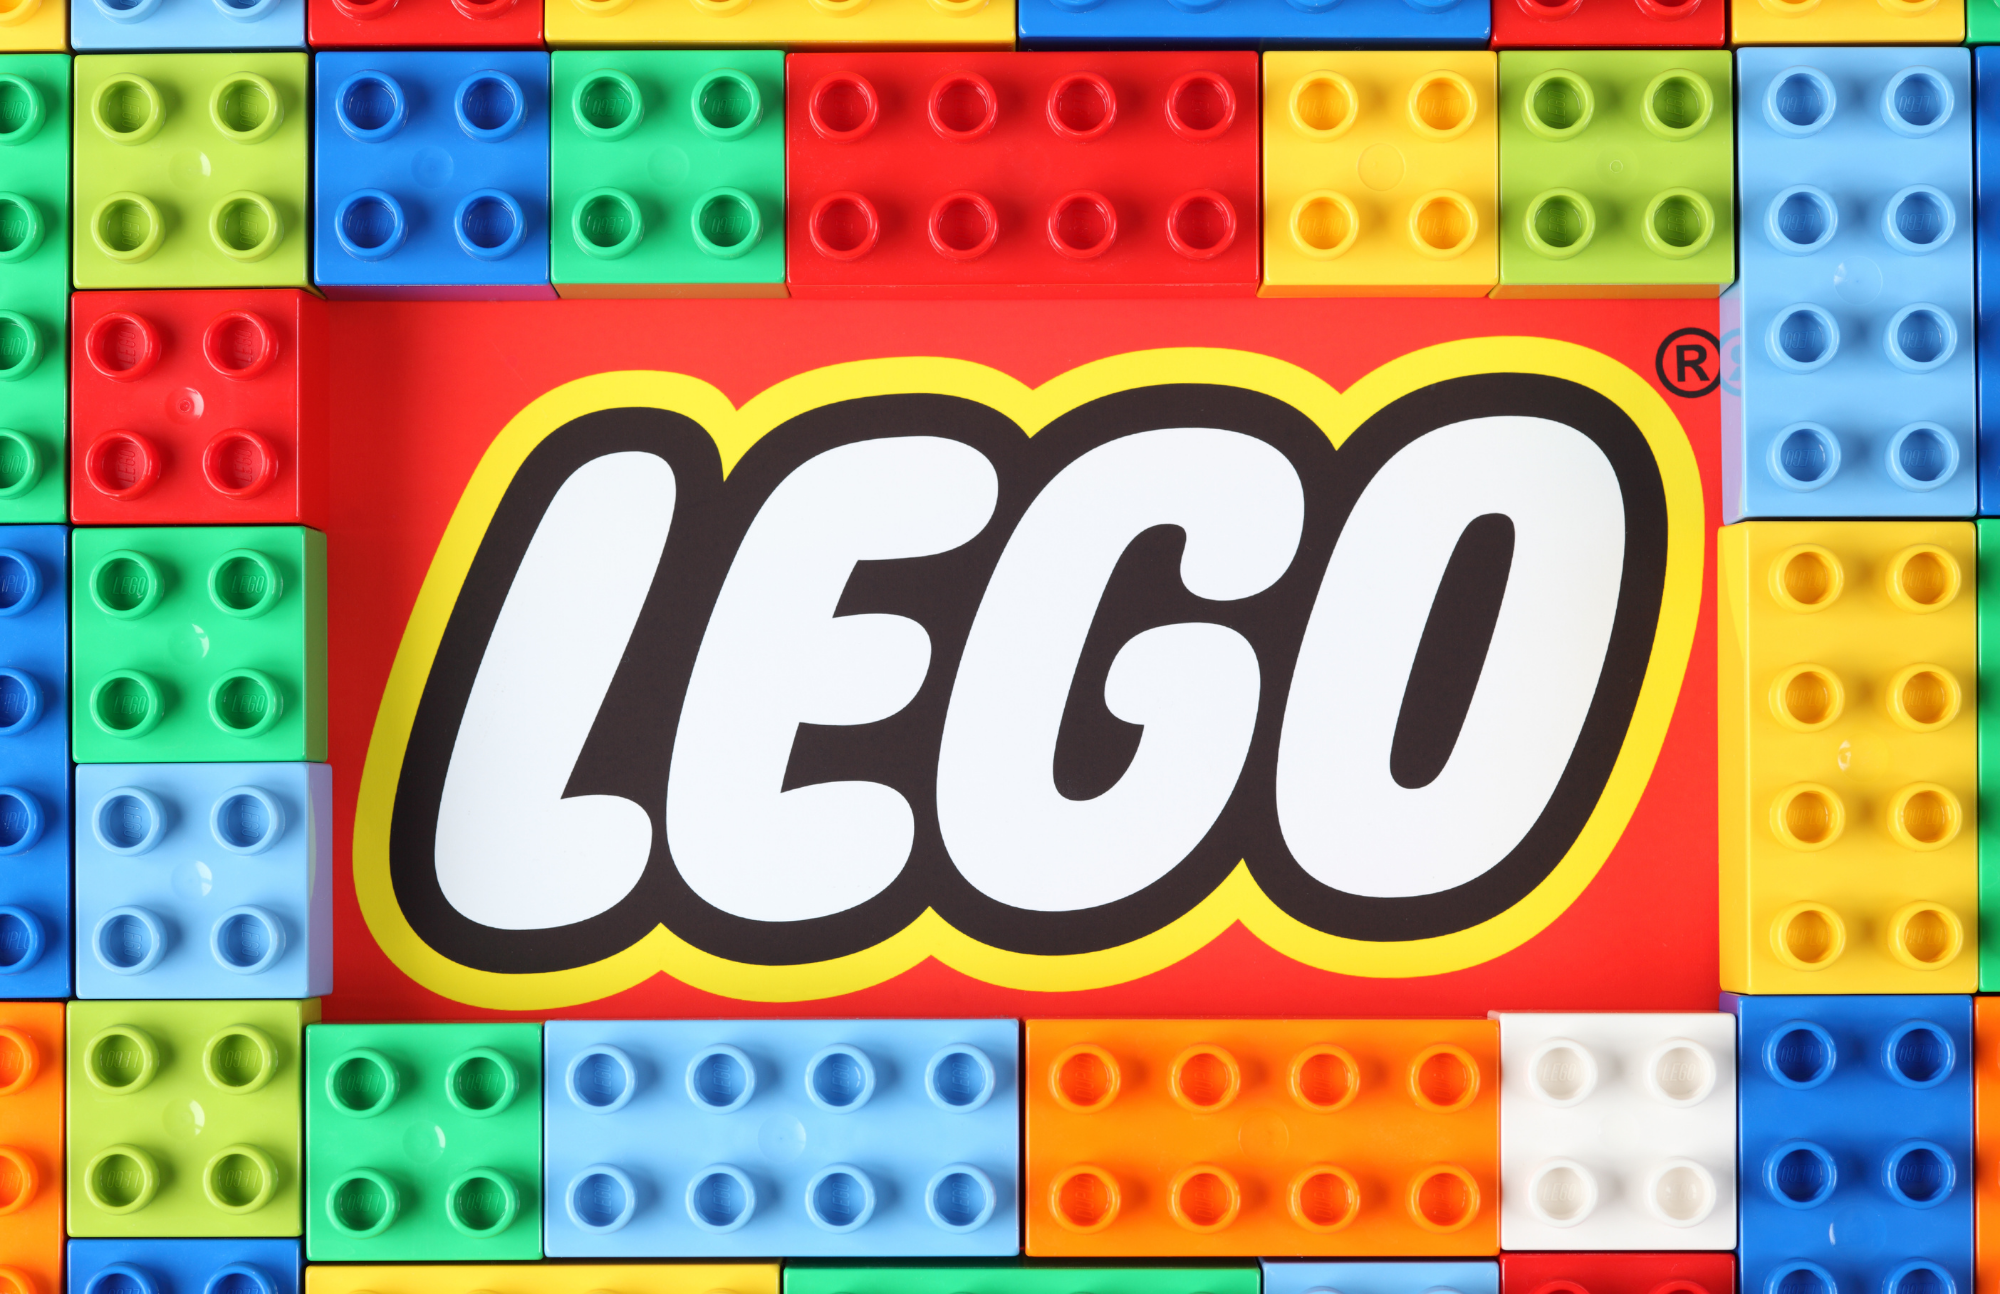 Lego logo with colorful bricks